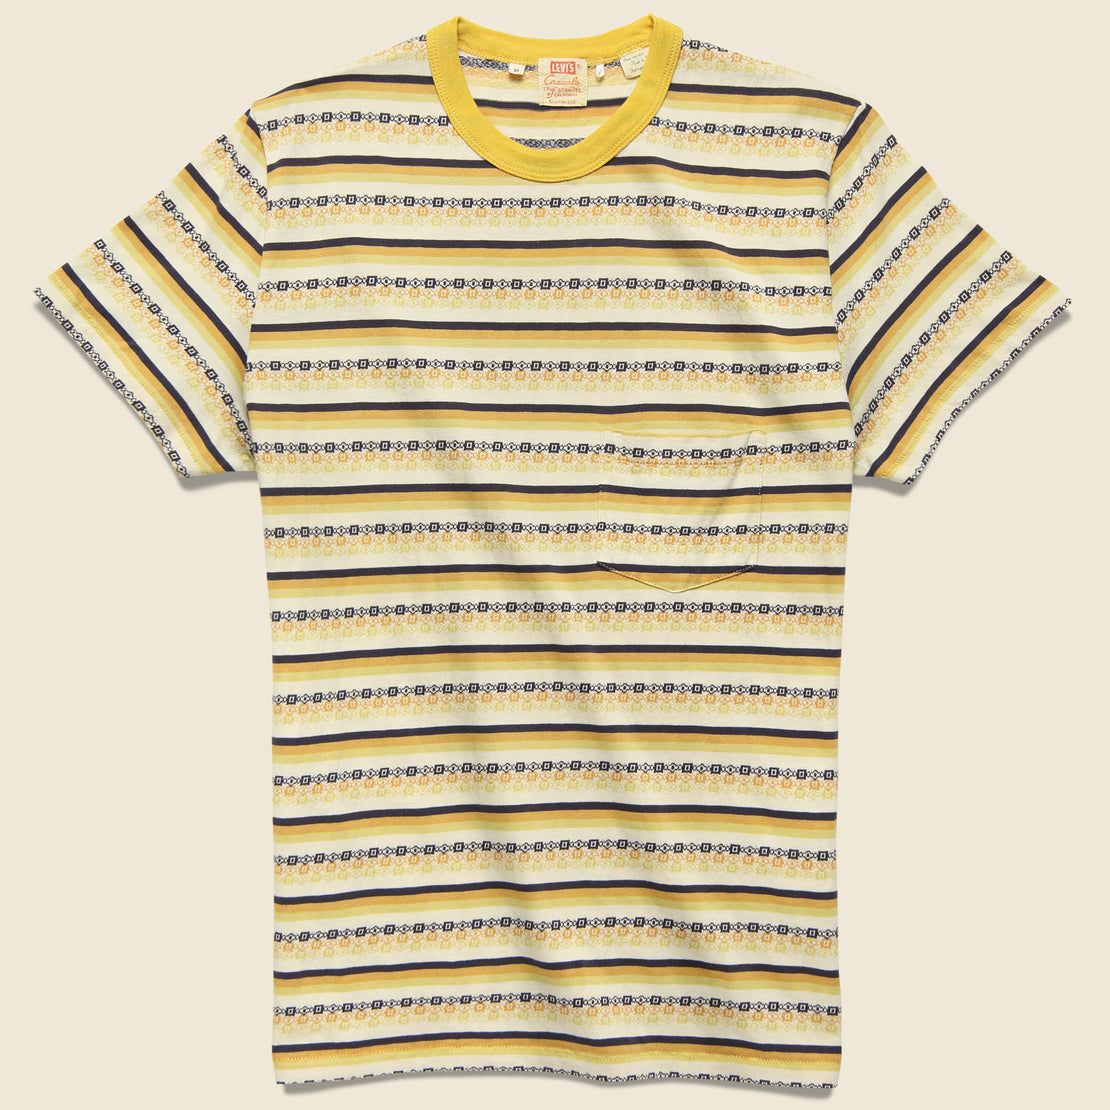 Levis Vintage Clothing 1960s Casual Stripe Tee - Custard Stripe Jacquard